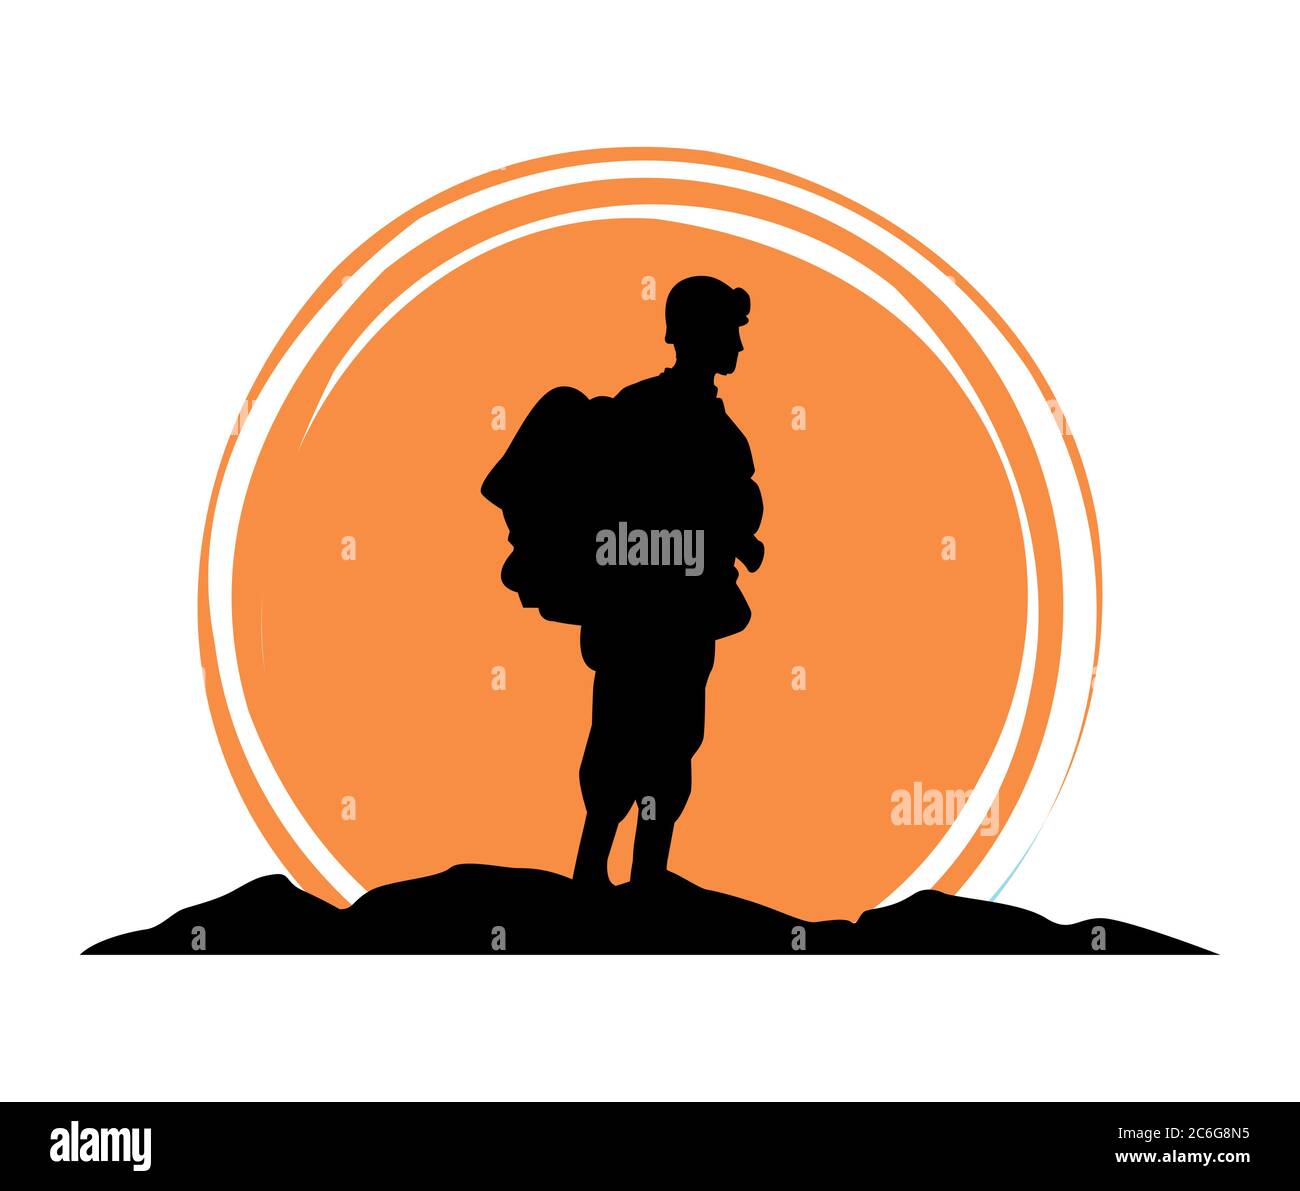 military soldier silhouette figure icon vector illustration design Stock Vector